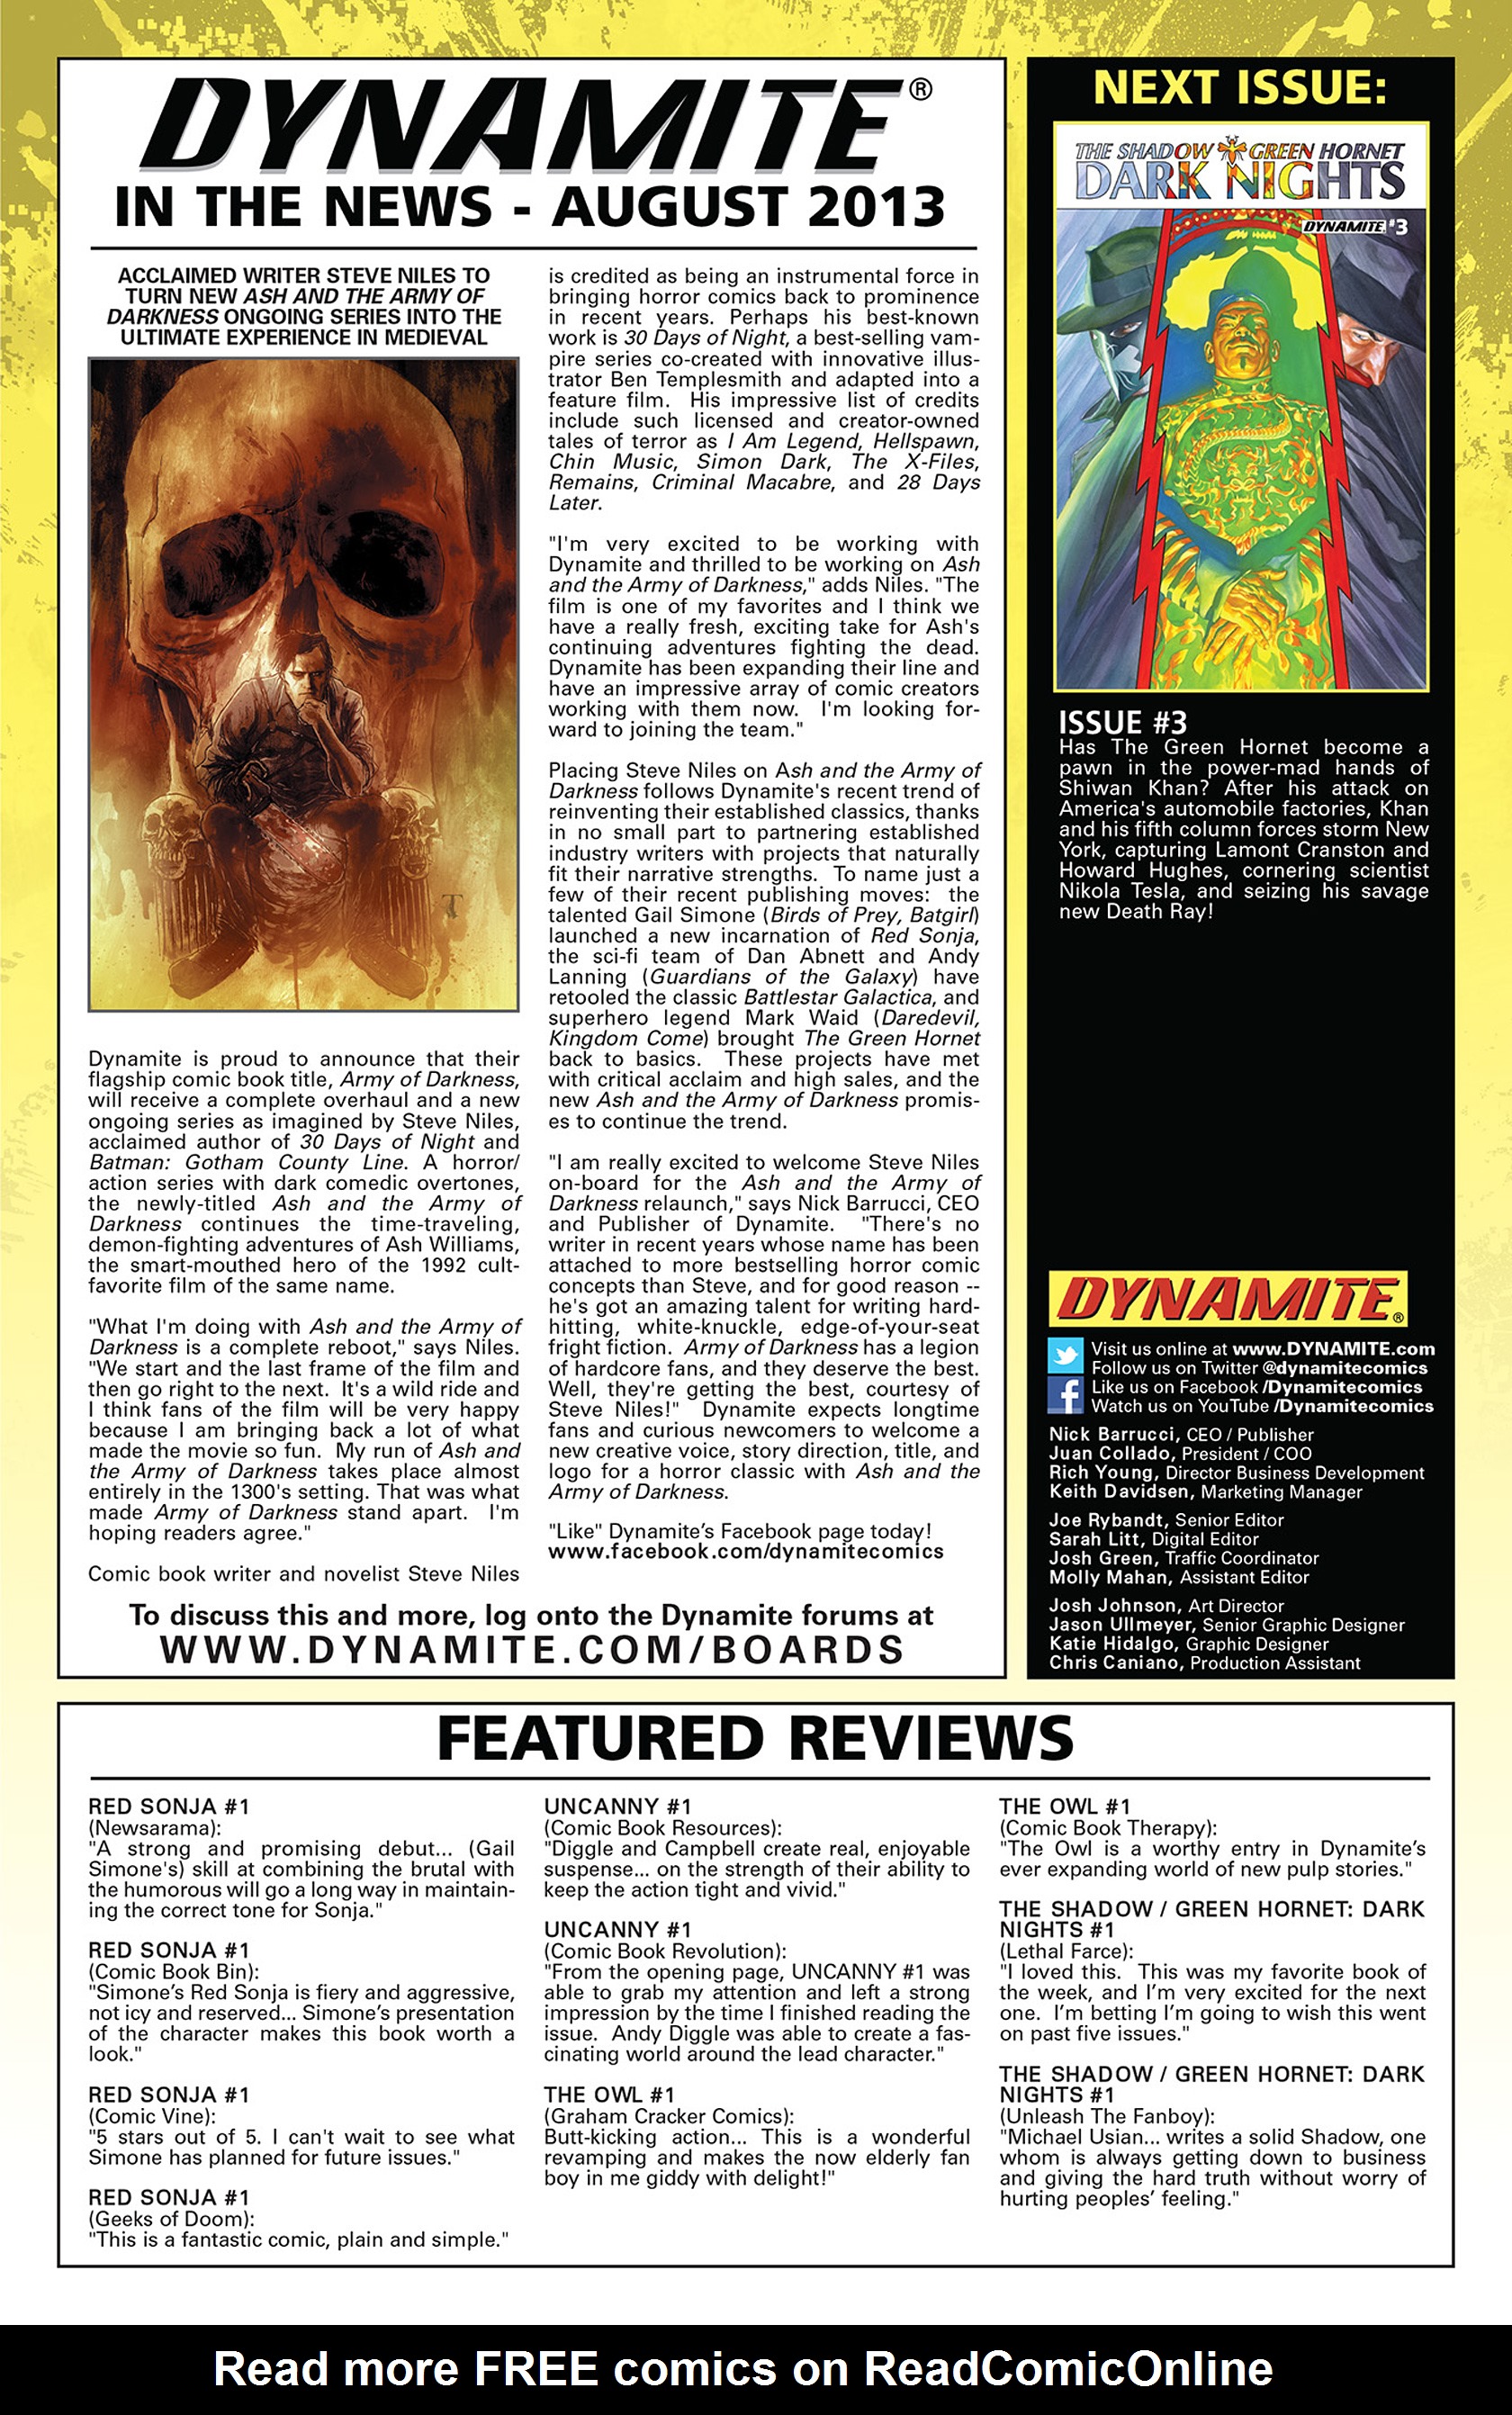 Read online The Shadow/Green Hornet: Dark Nights comic -  Issue #2 - 27